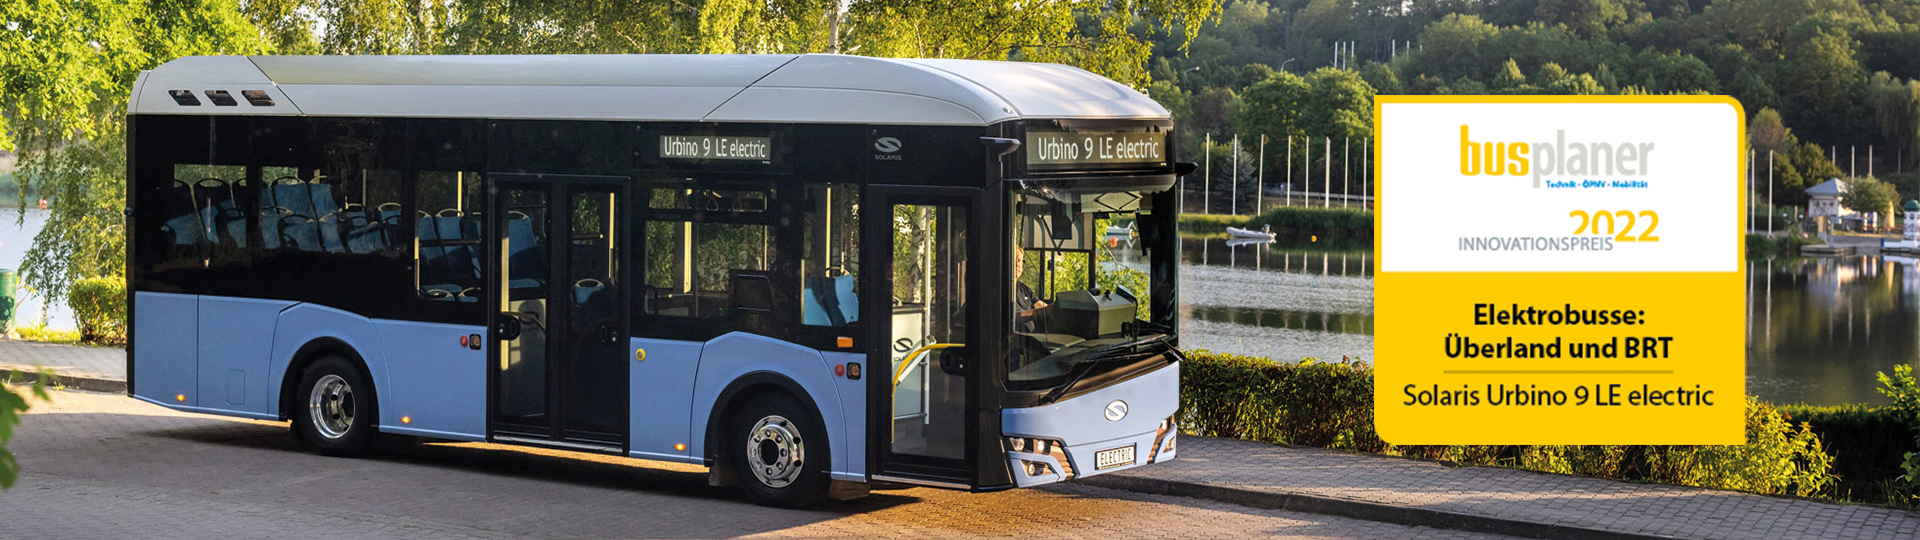 Solaris Urbino 9 LE electric receives the prestigious busplaner Innovation Award 2022!